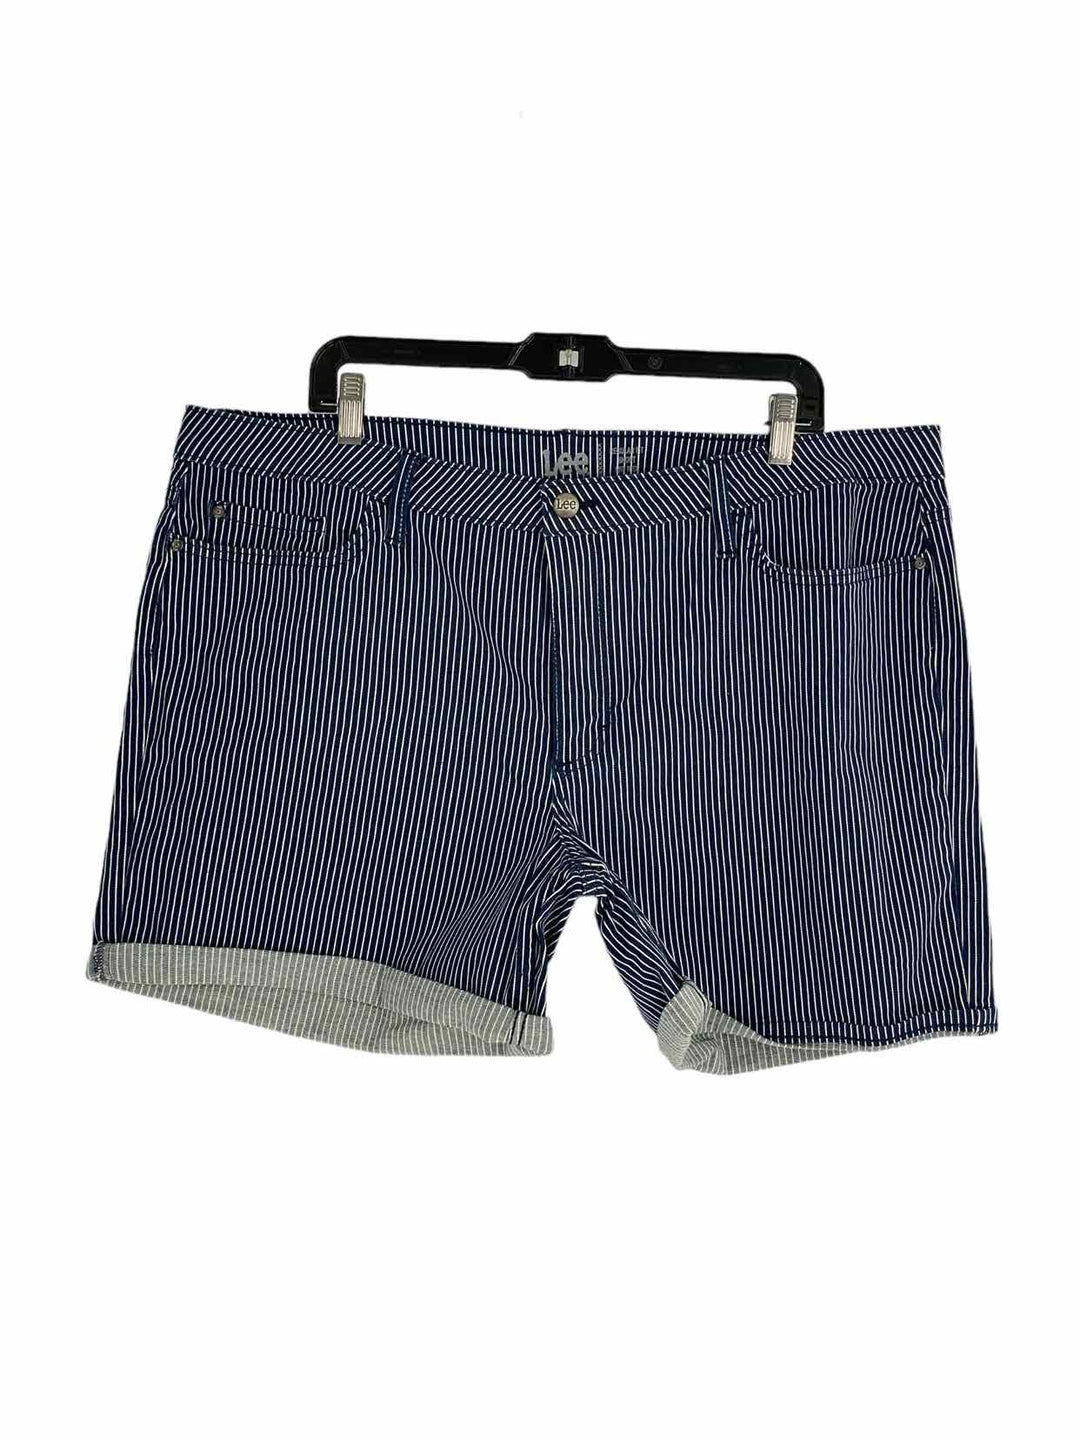 Lee Size 20 Blue White Stripe Shorts